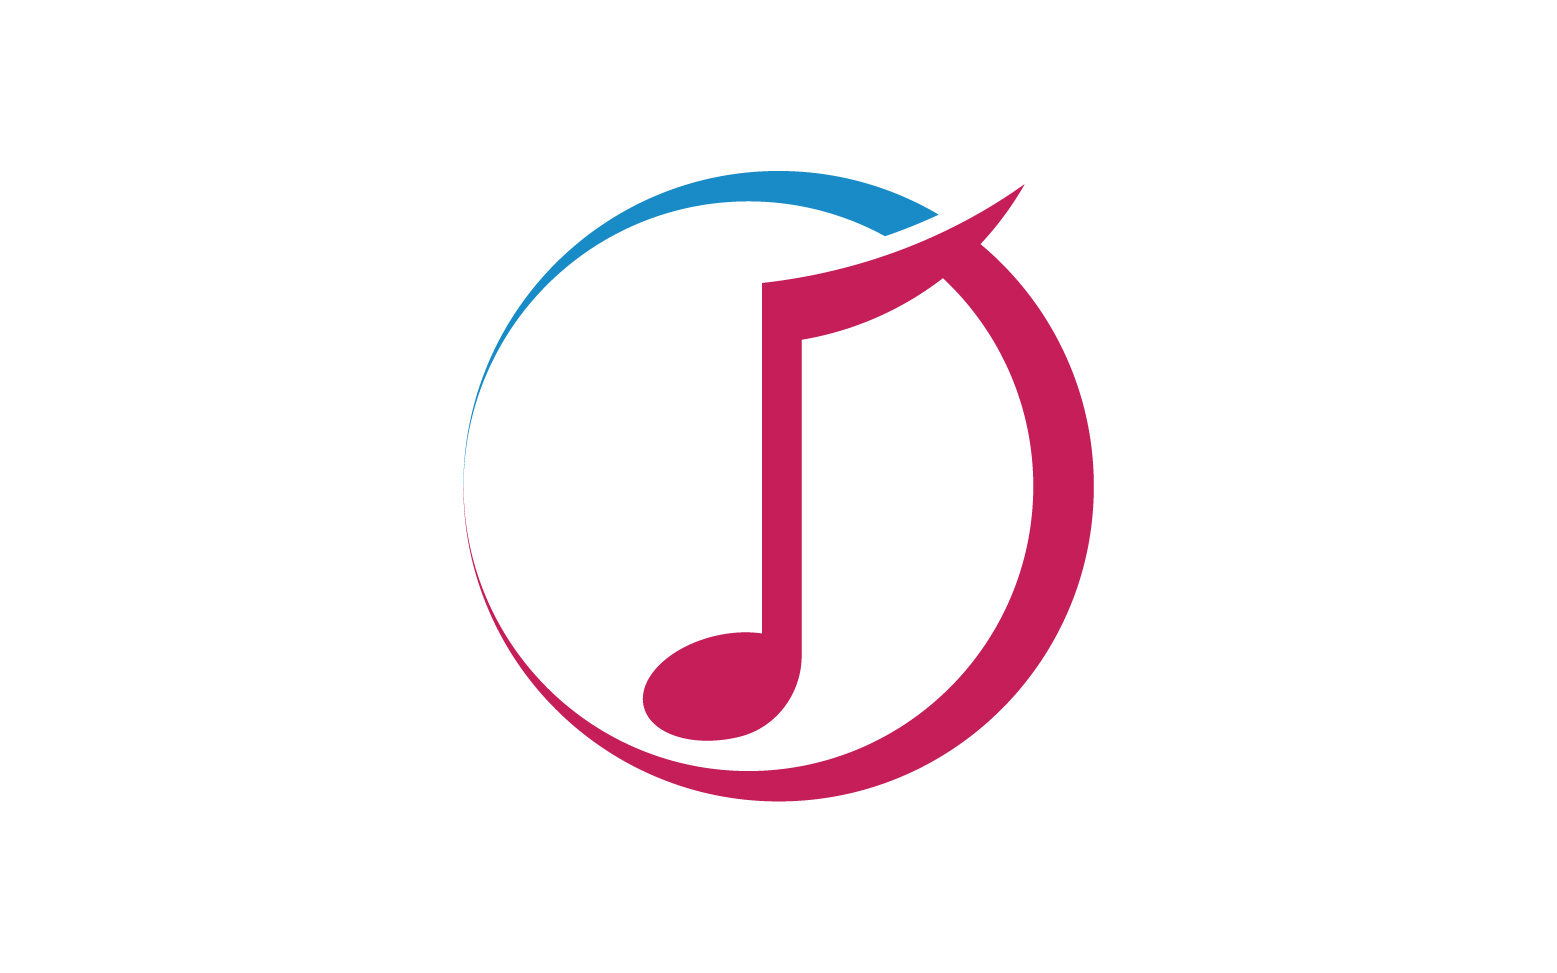 Music sound player app icon logo v3